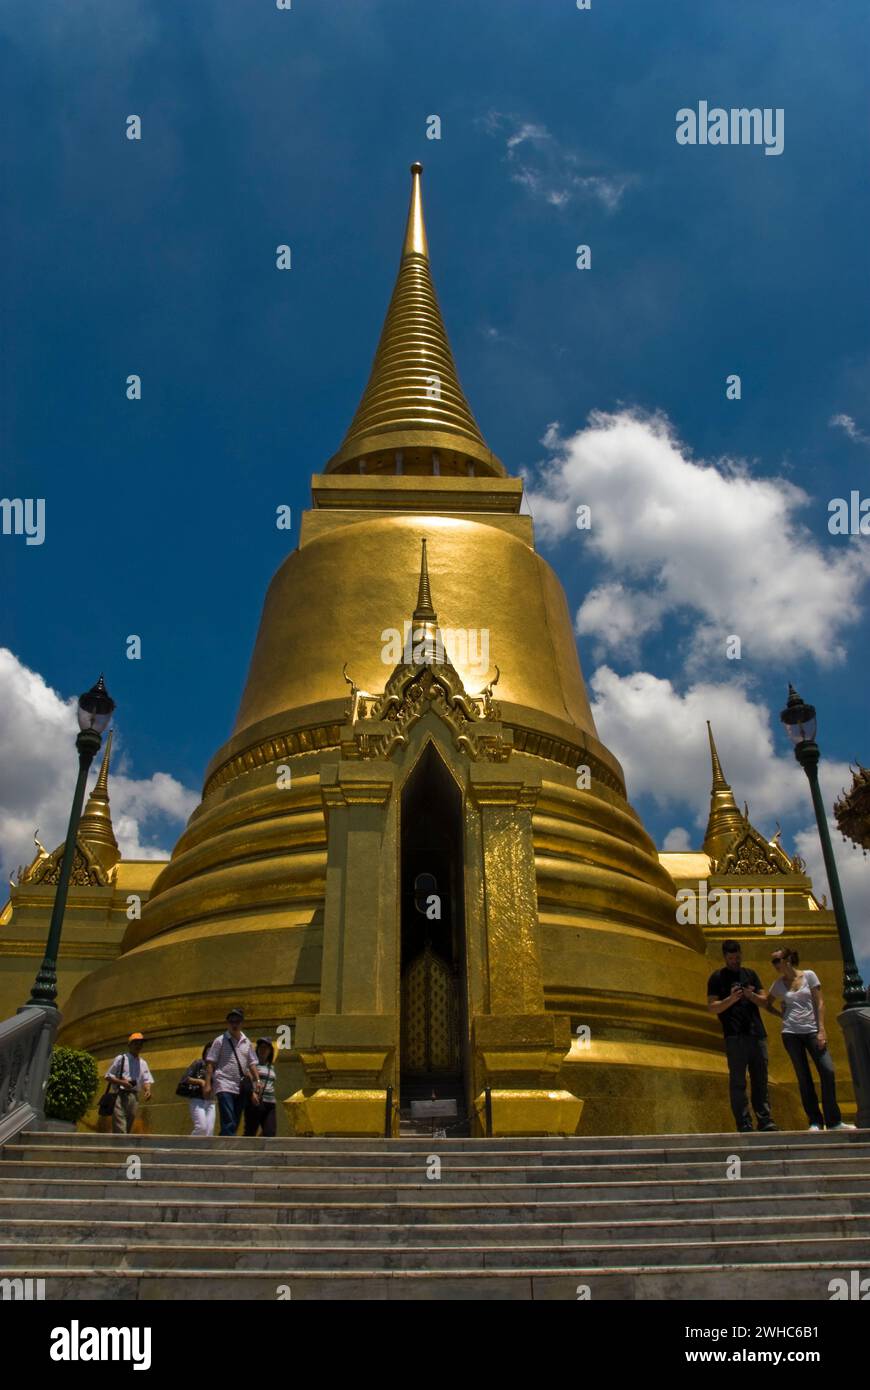 Tempel Phra Sri Rattana im großen Königspalast in der thailändischen Hauptstadt Bangkok Stockfoto